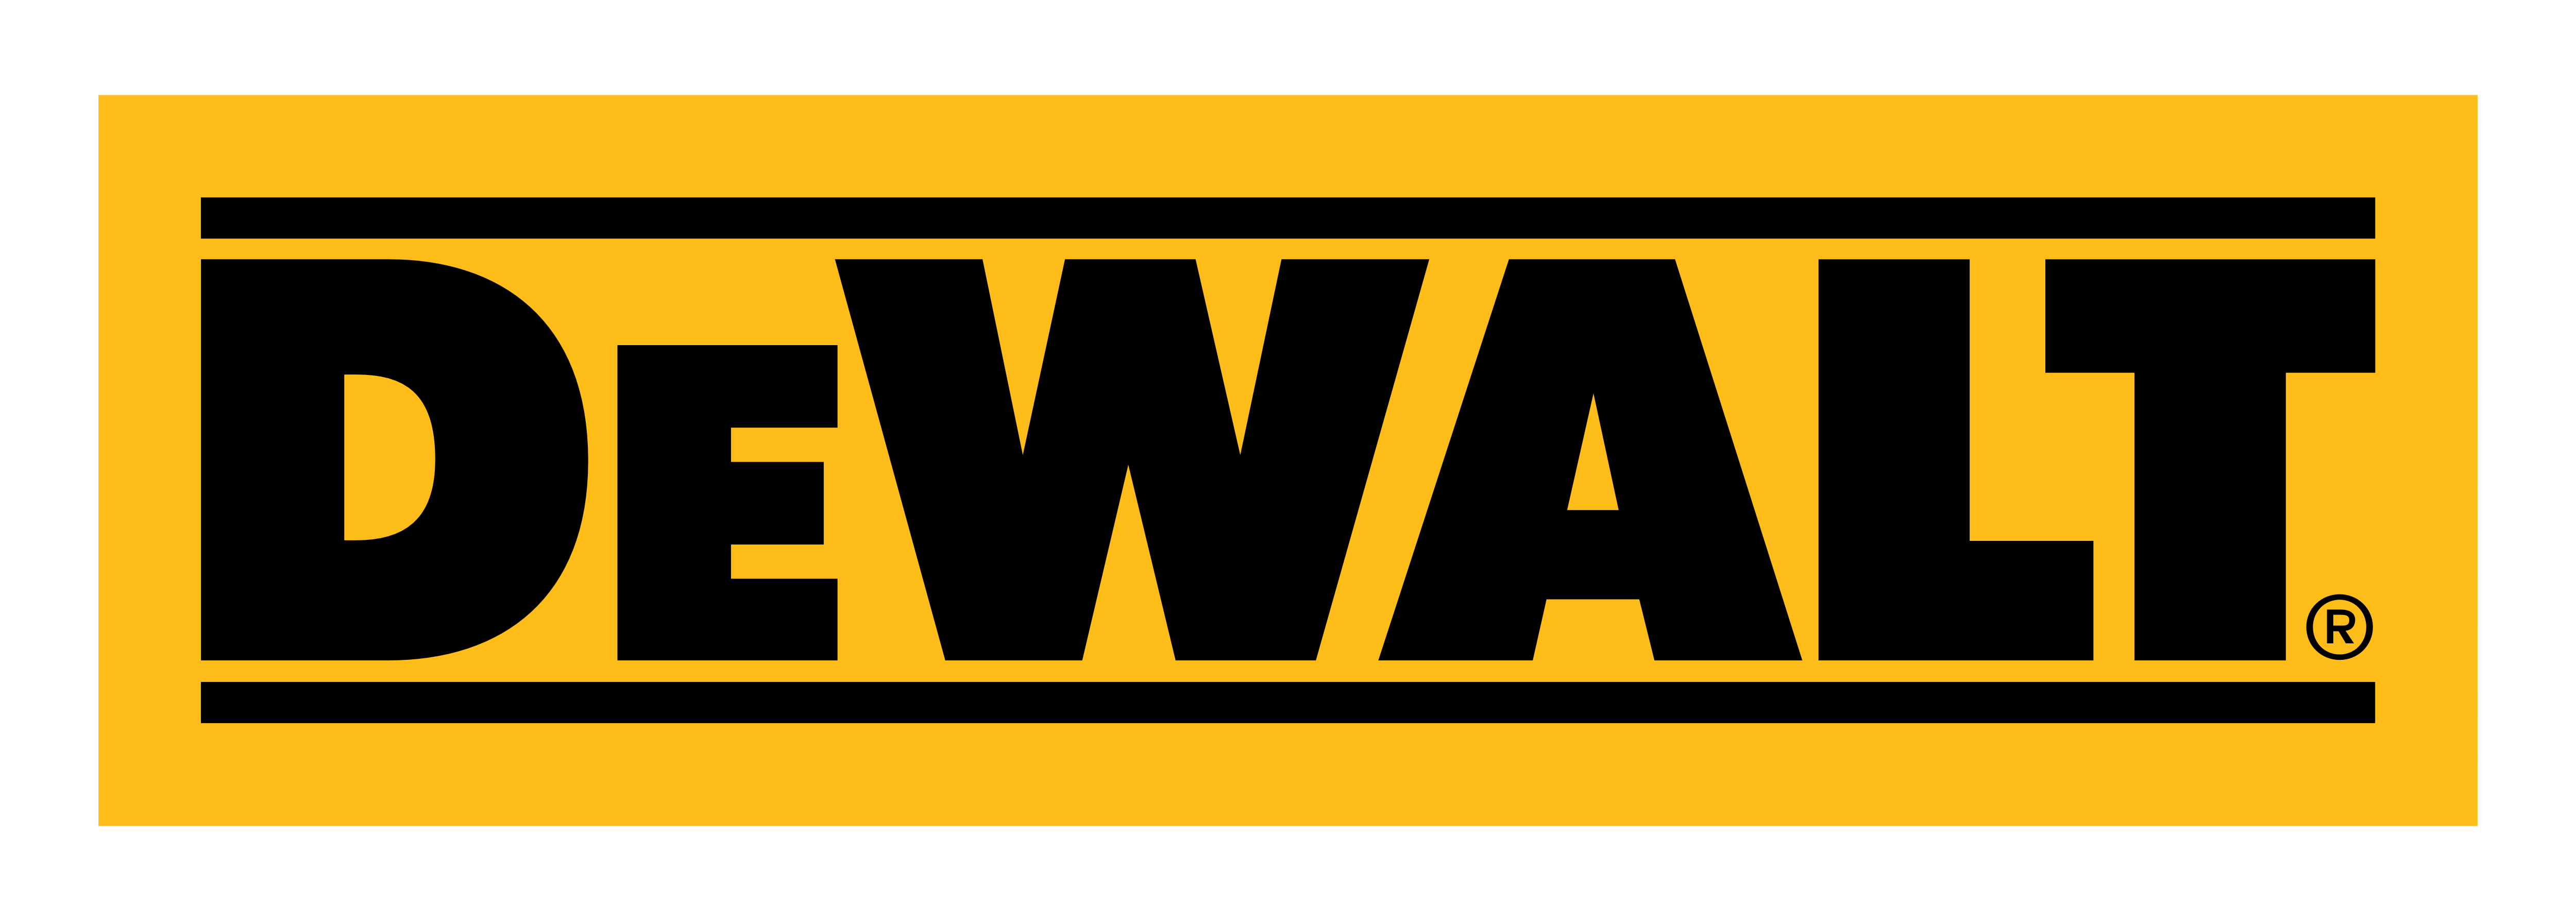 Dewalt – Logos Download